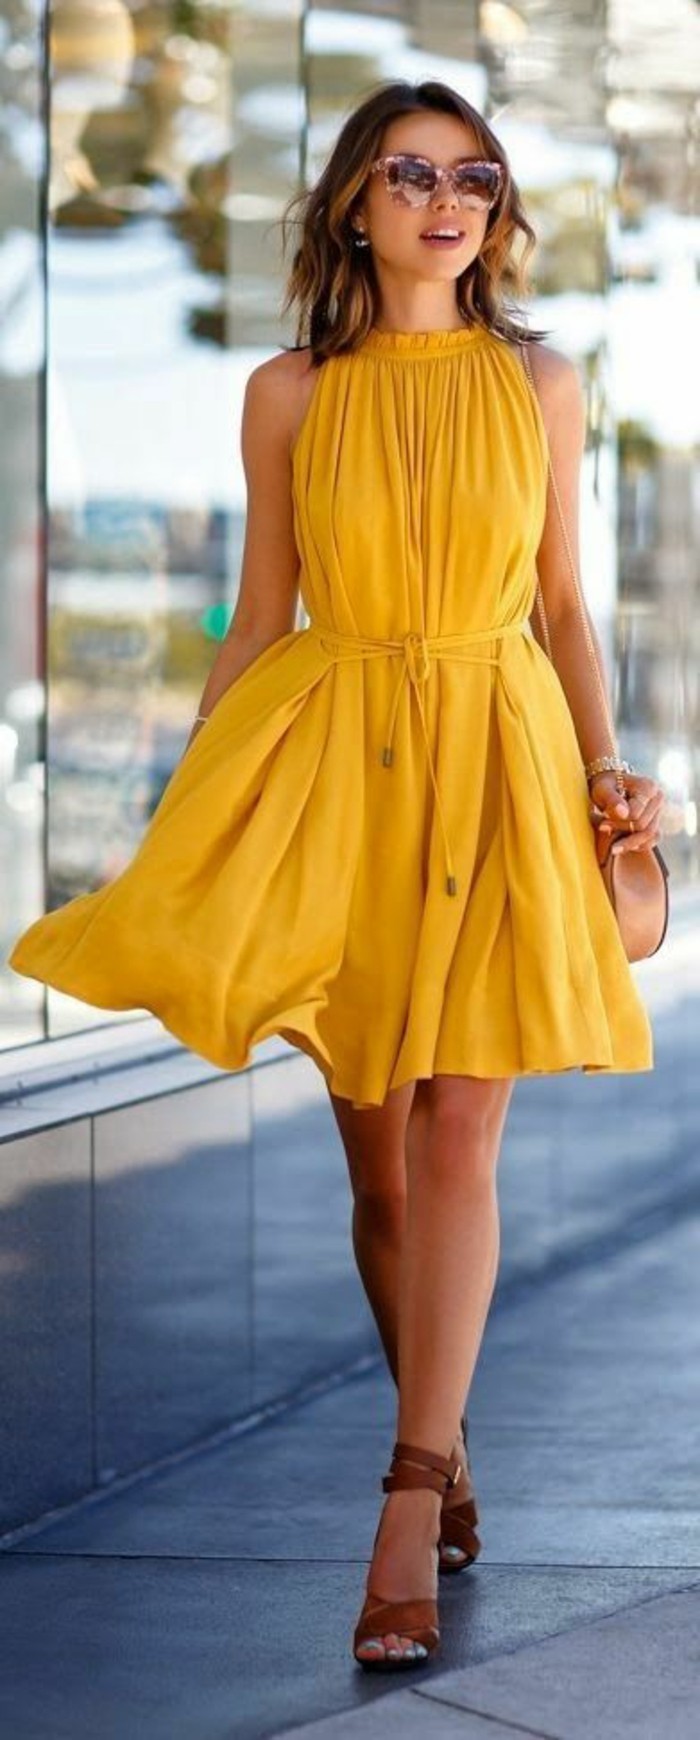 tenue-casual-chic-femme-tenue-cool-chic-femme-bien-habillée-robe-jaune-jolie